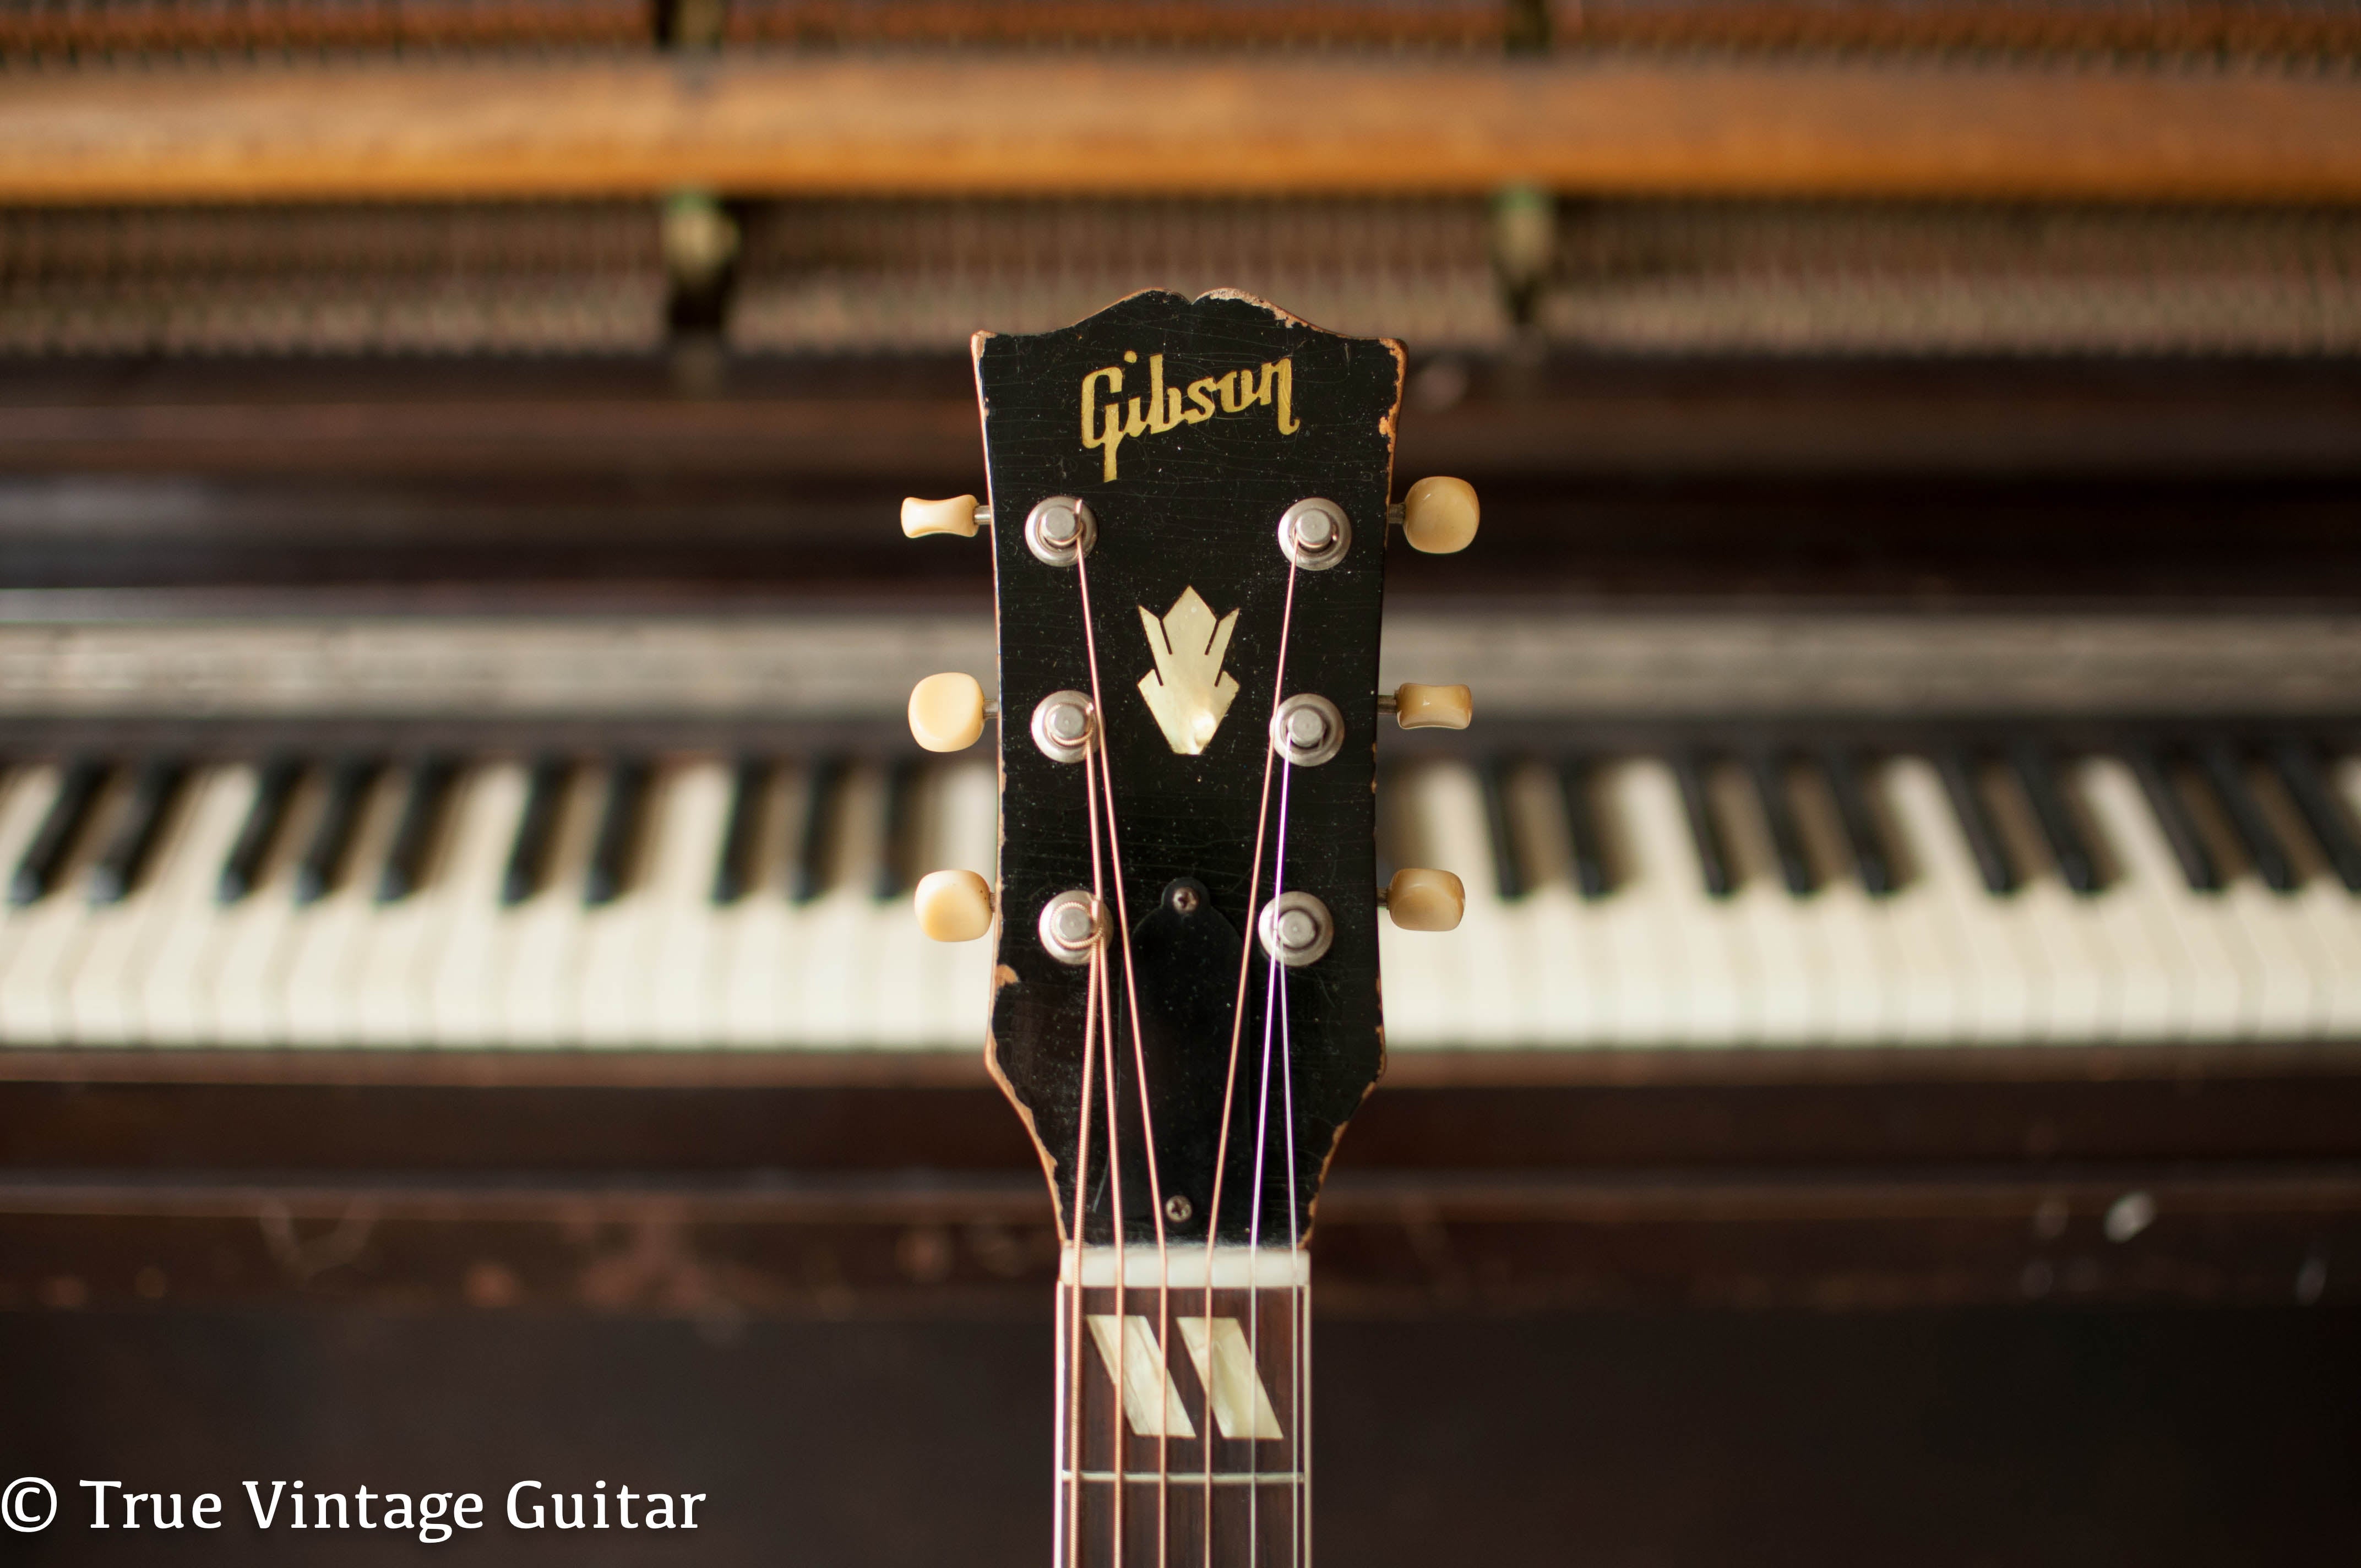 1950s Gibson headstock, pearl Gibson inlay, 1950s guitar